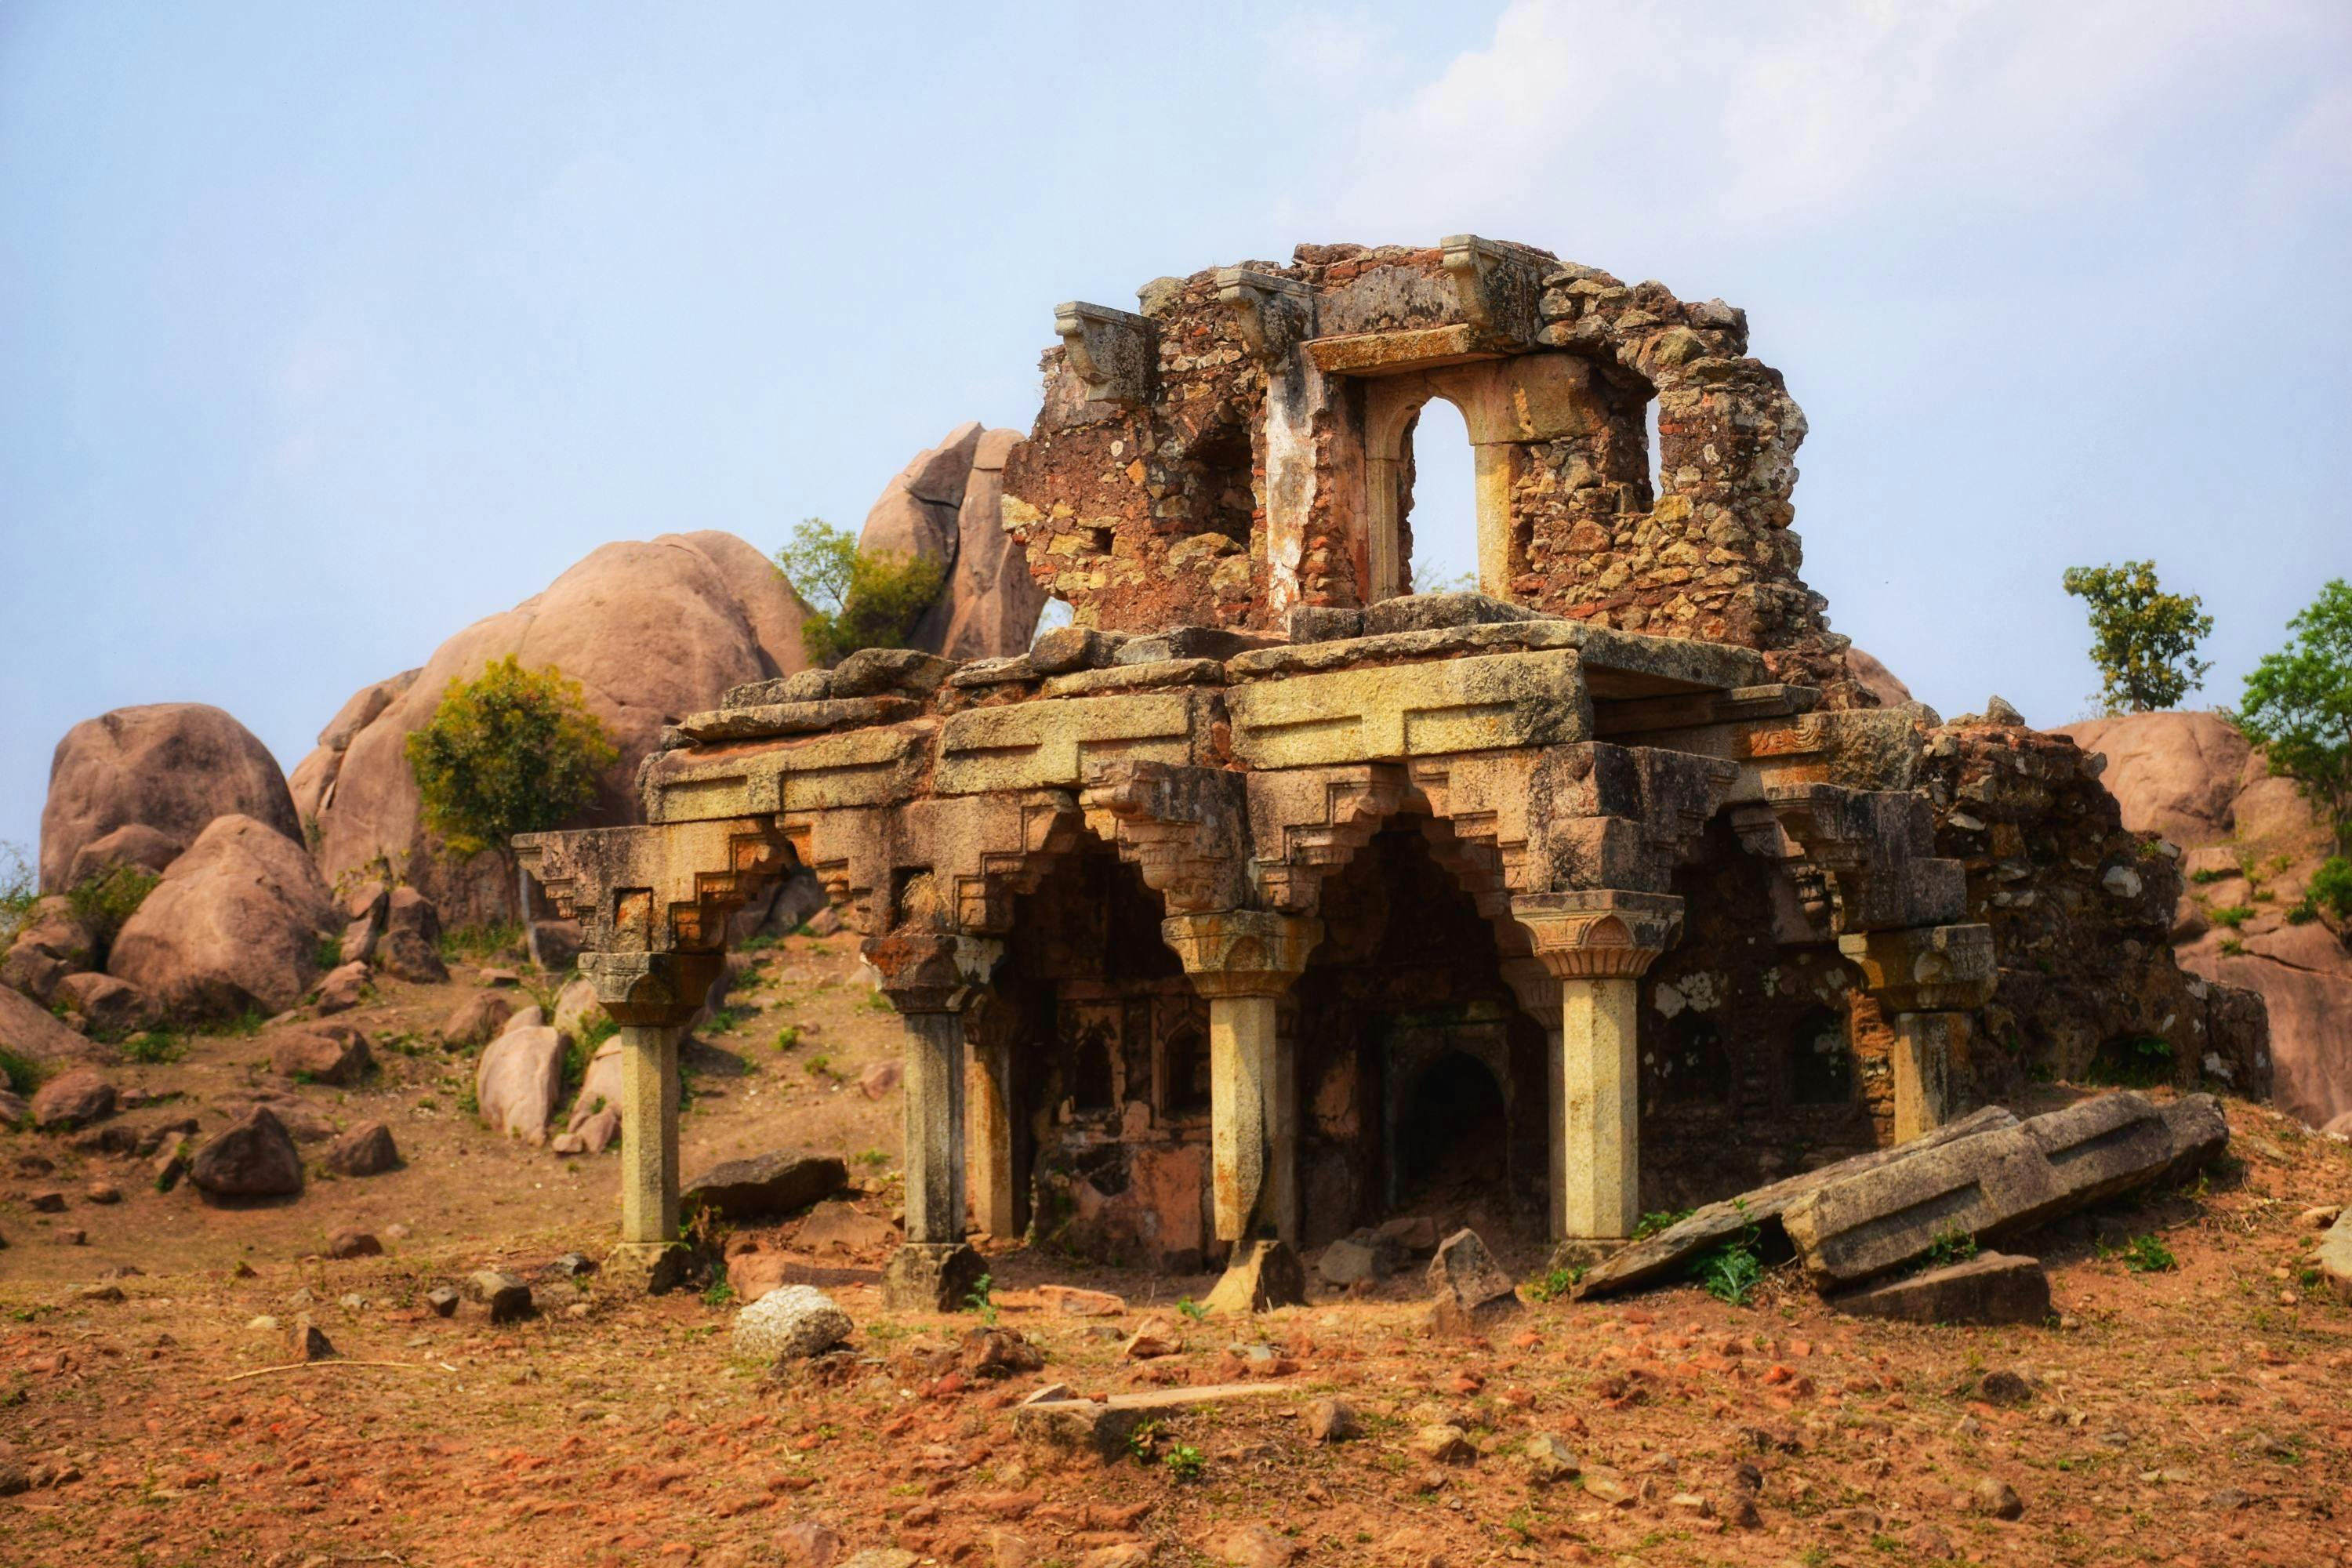 Ruined stone temple